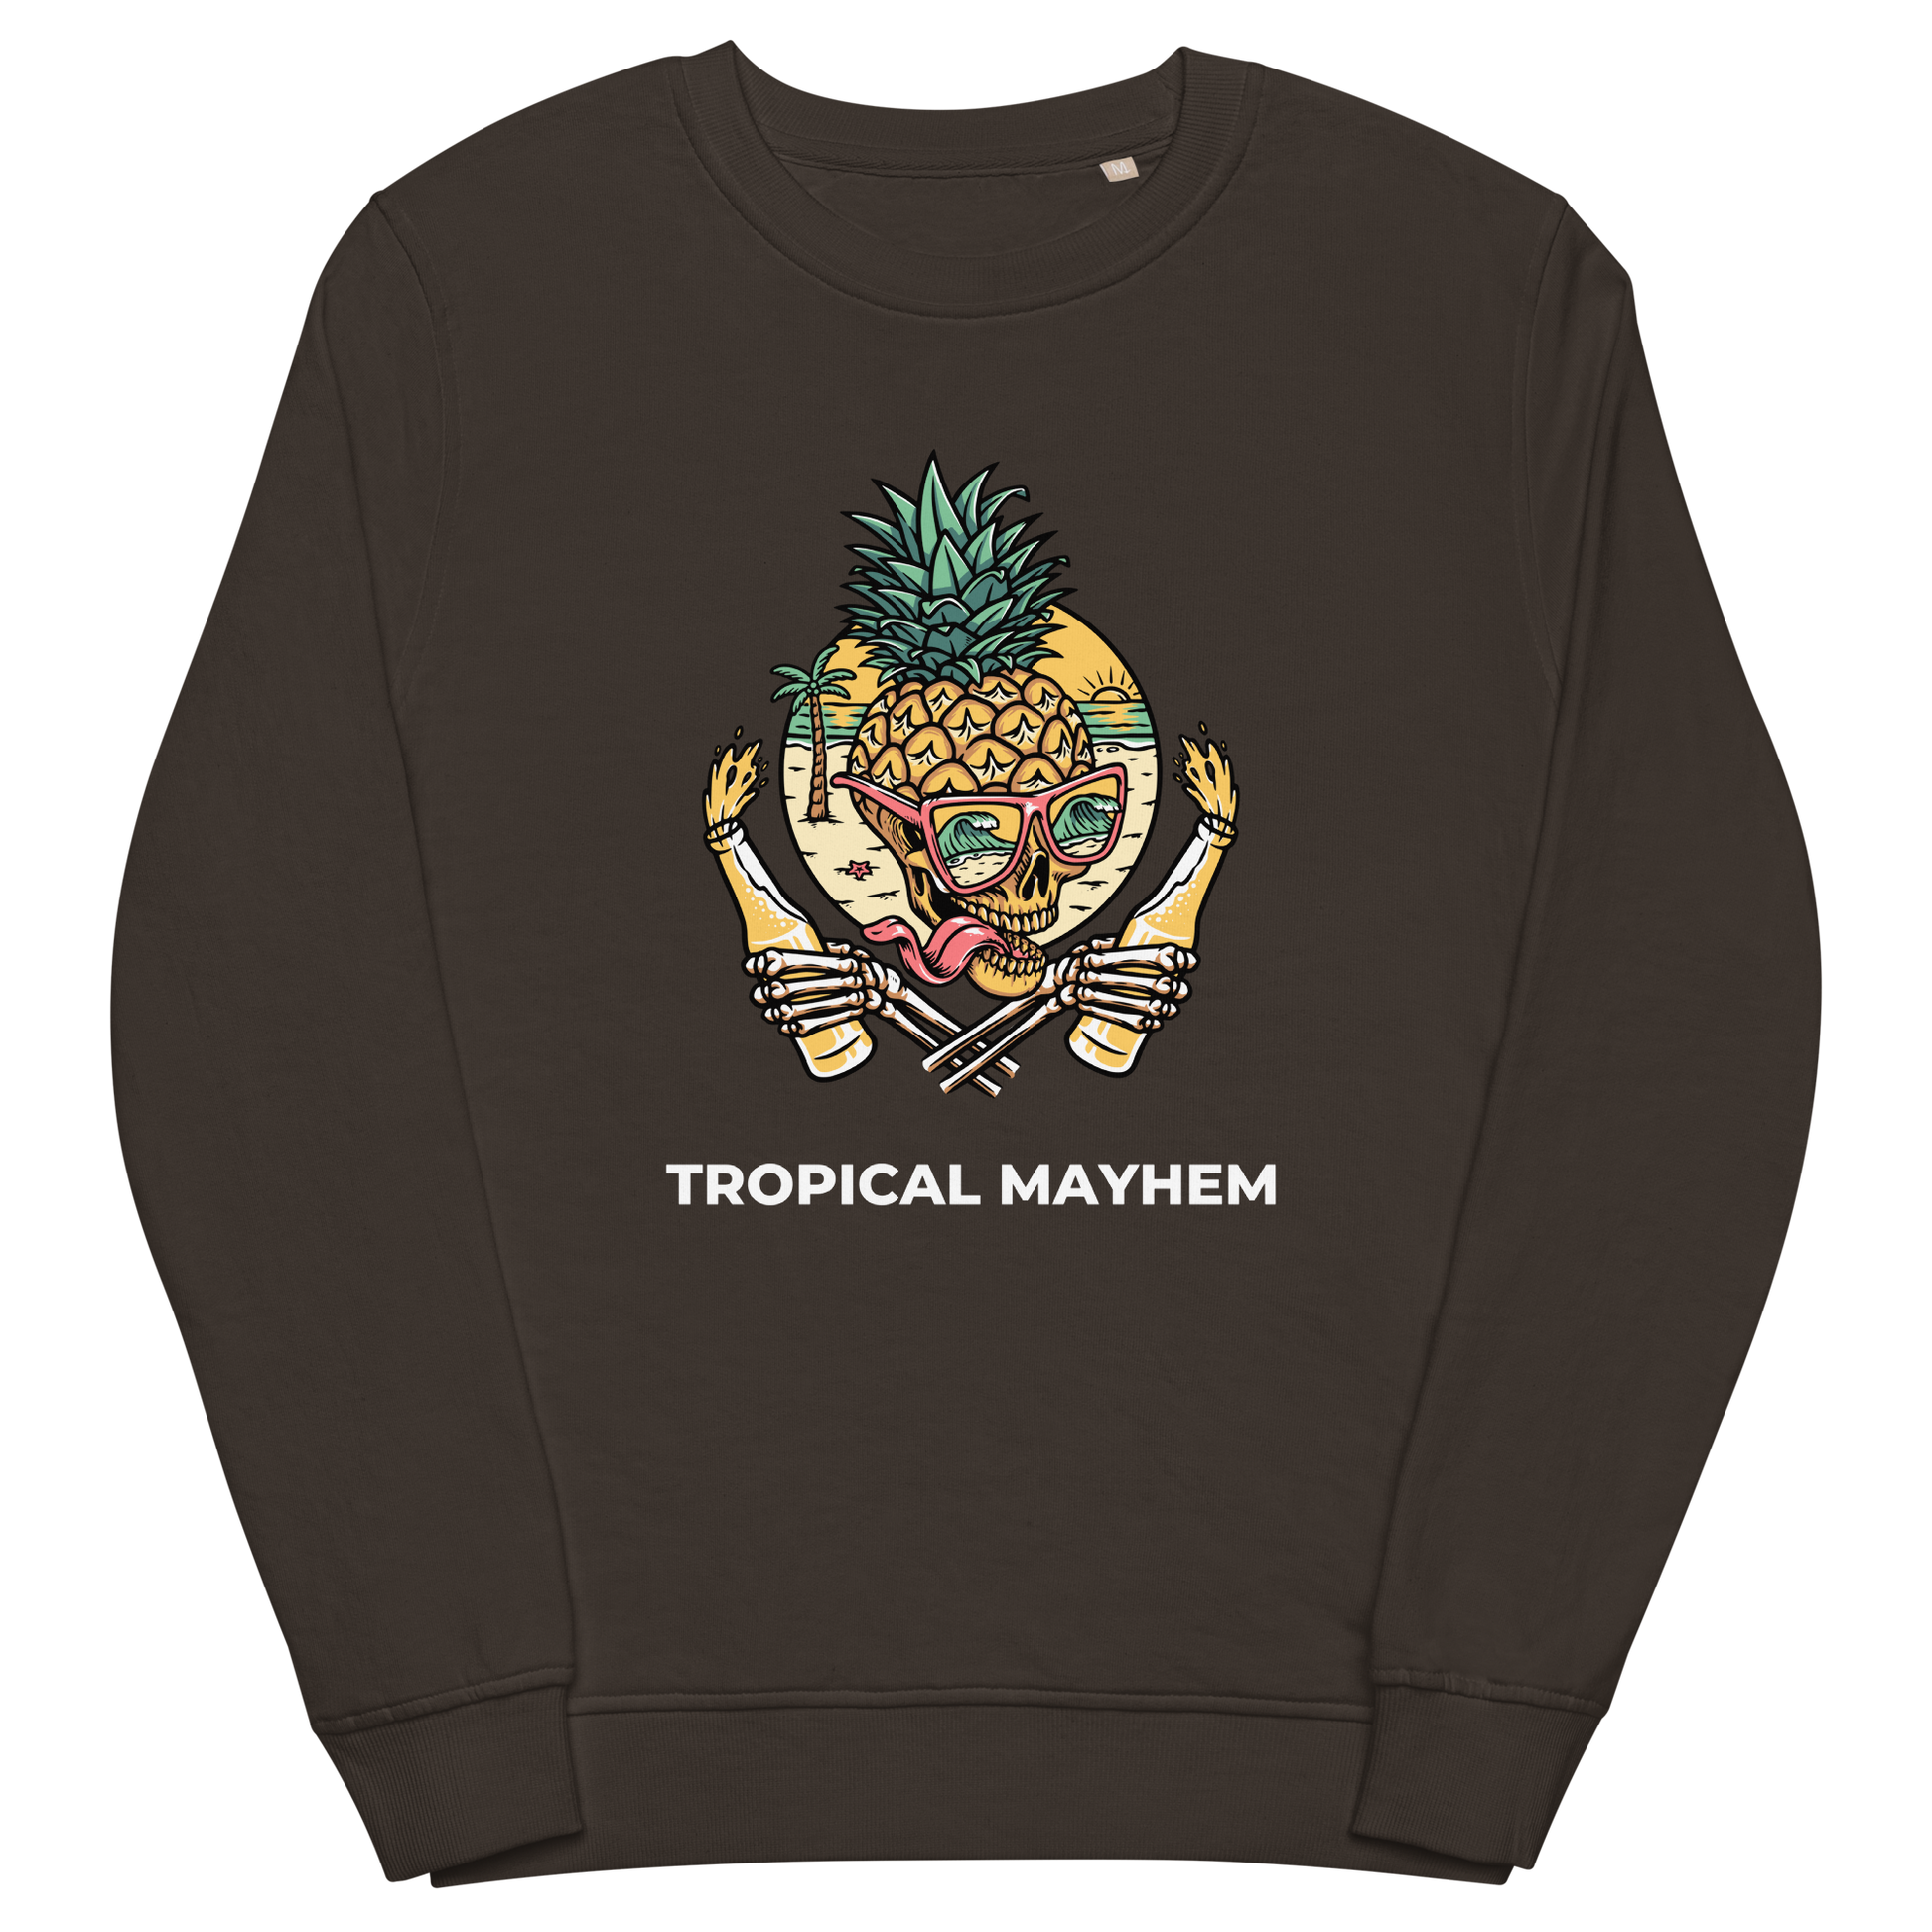 Deep Charcoal Grey Organic Cotton Tropical Mayhem Sweatshirt featuring a Crazy Pineapple Skull graphic on the chest - Funny Graphic Pineapple Sweatshirts - Boozy Fox